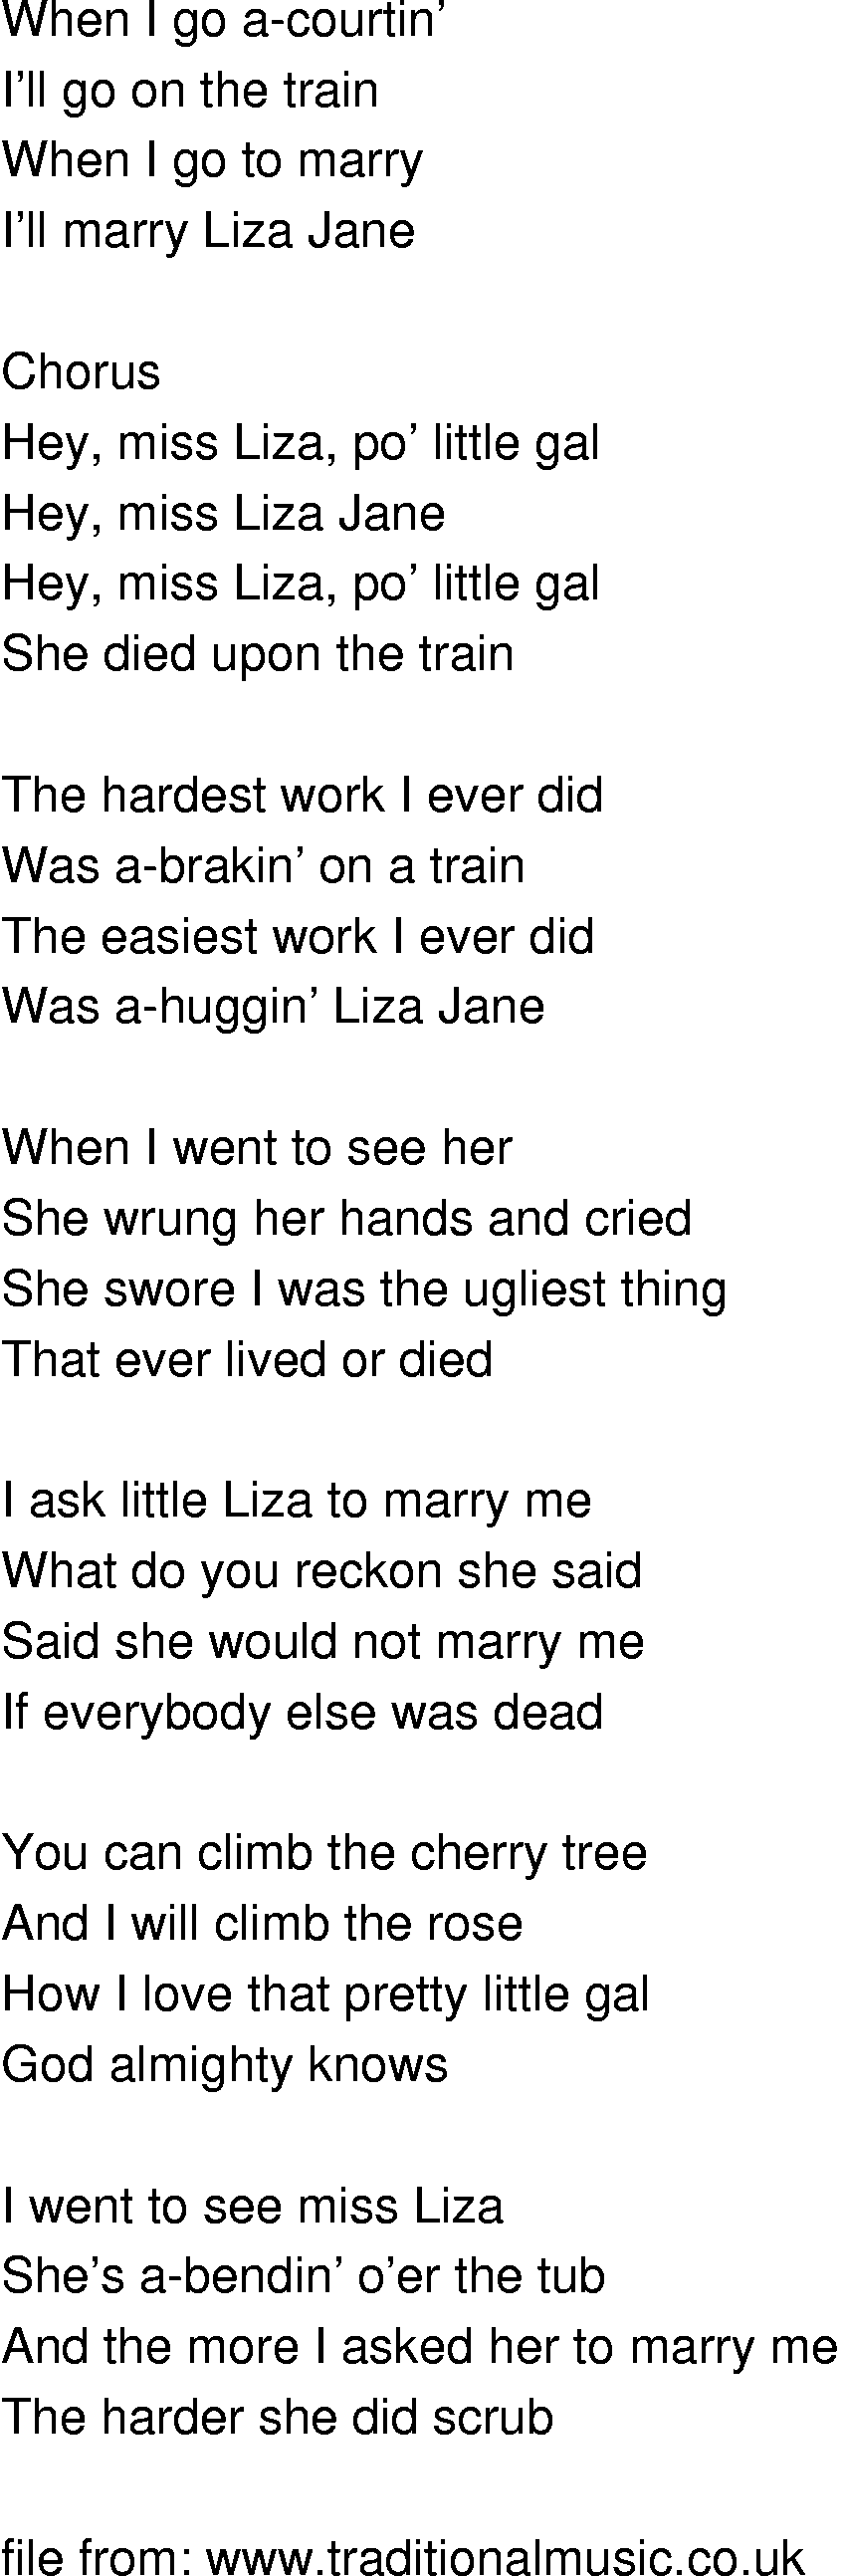 Old-Time (oldtimey) Song Lyrics - poor miss liza jane